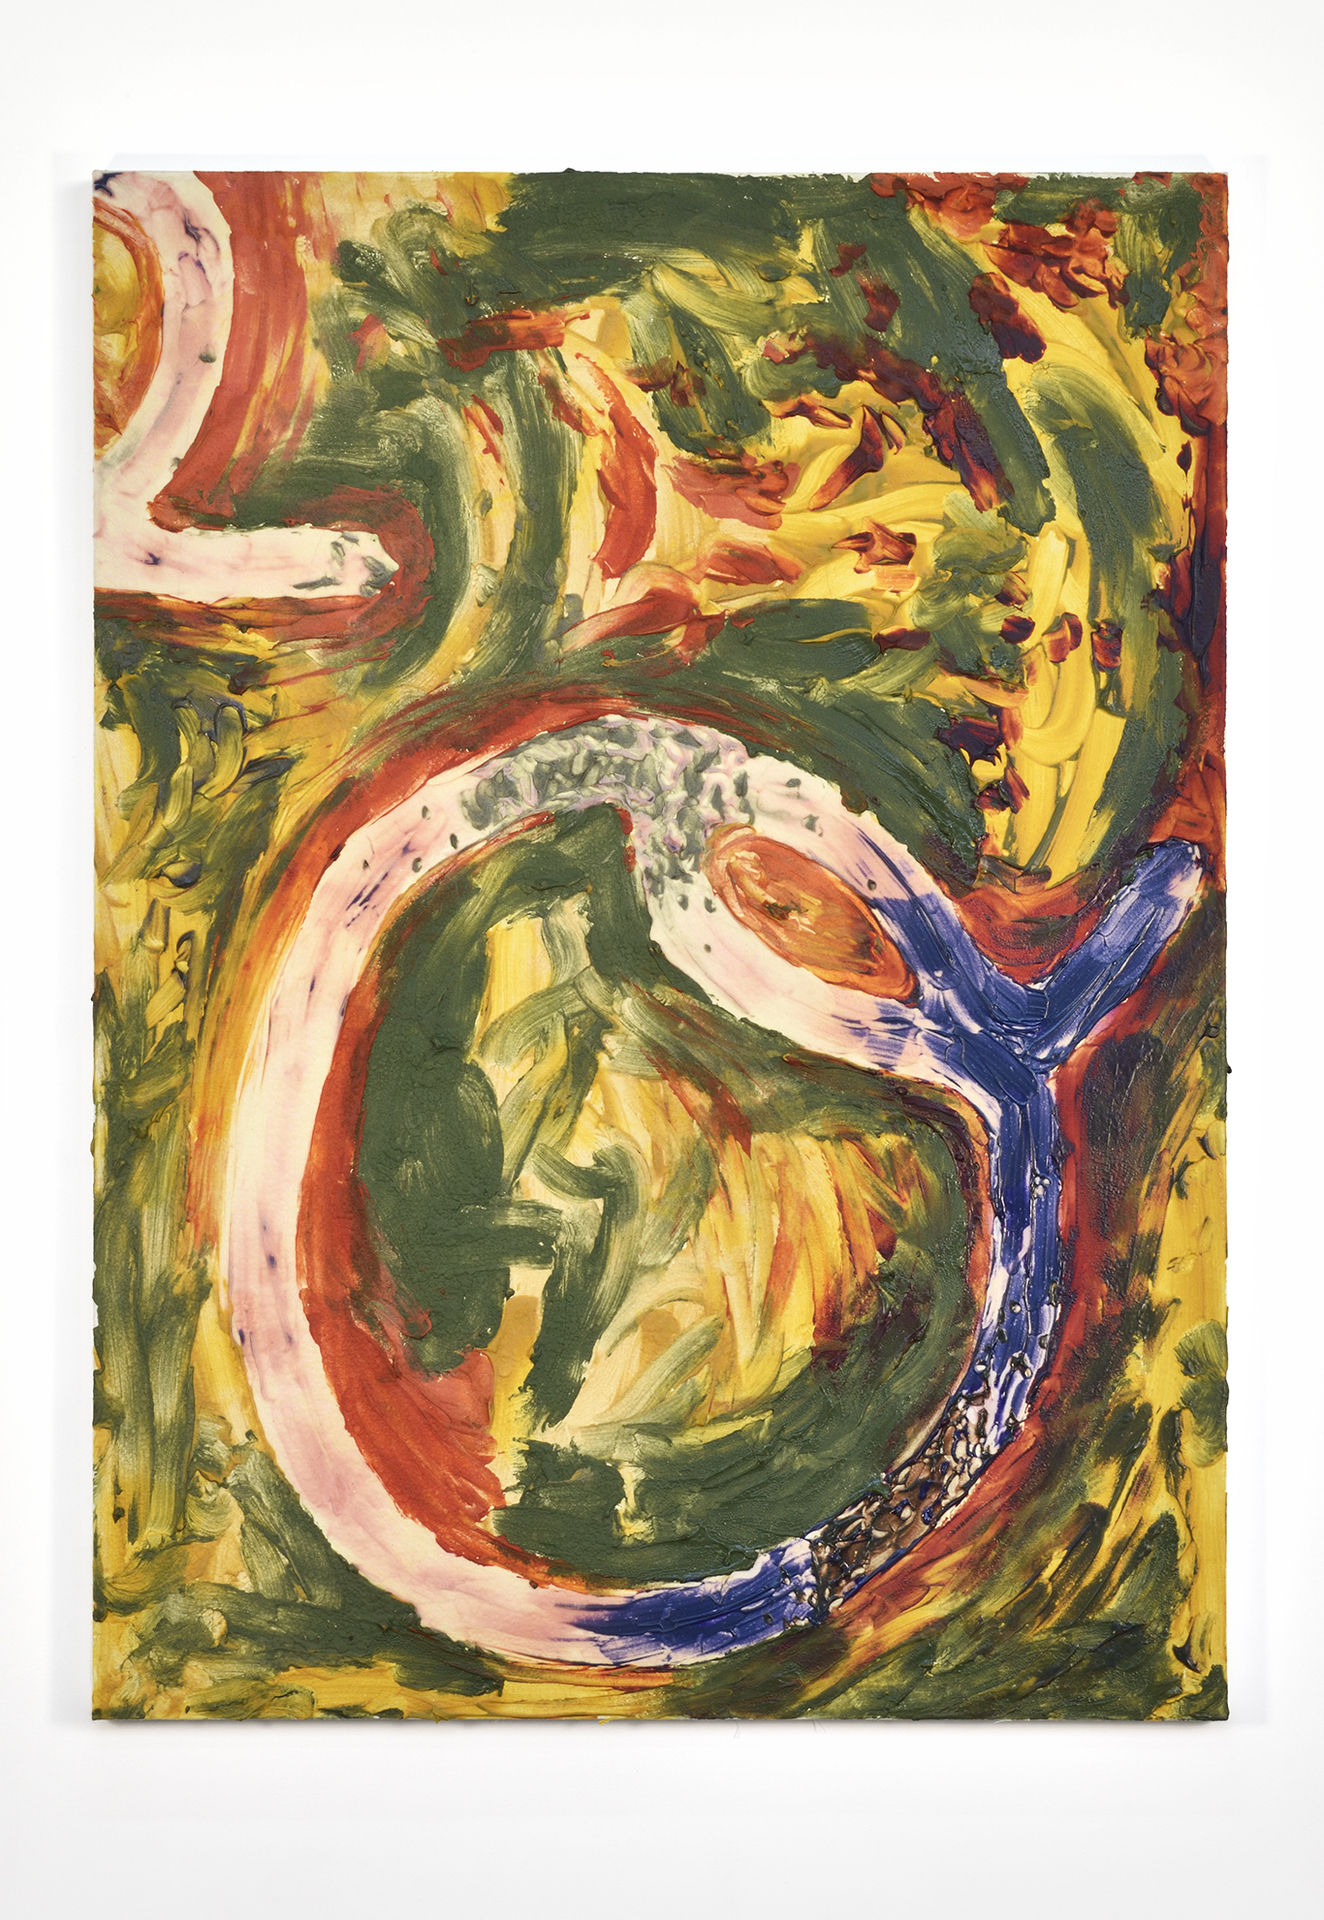 Matthieu Hemmer, Impressions : letter O, 2021, Acid, cobalt pigment and acrylic medium on canvas, 137 x 100 x 4 cm